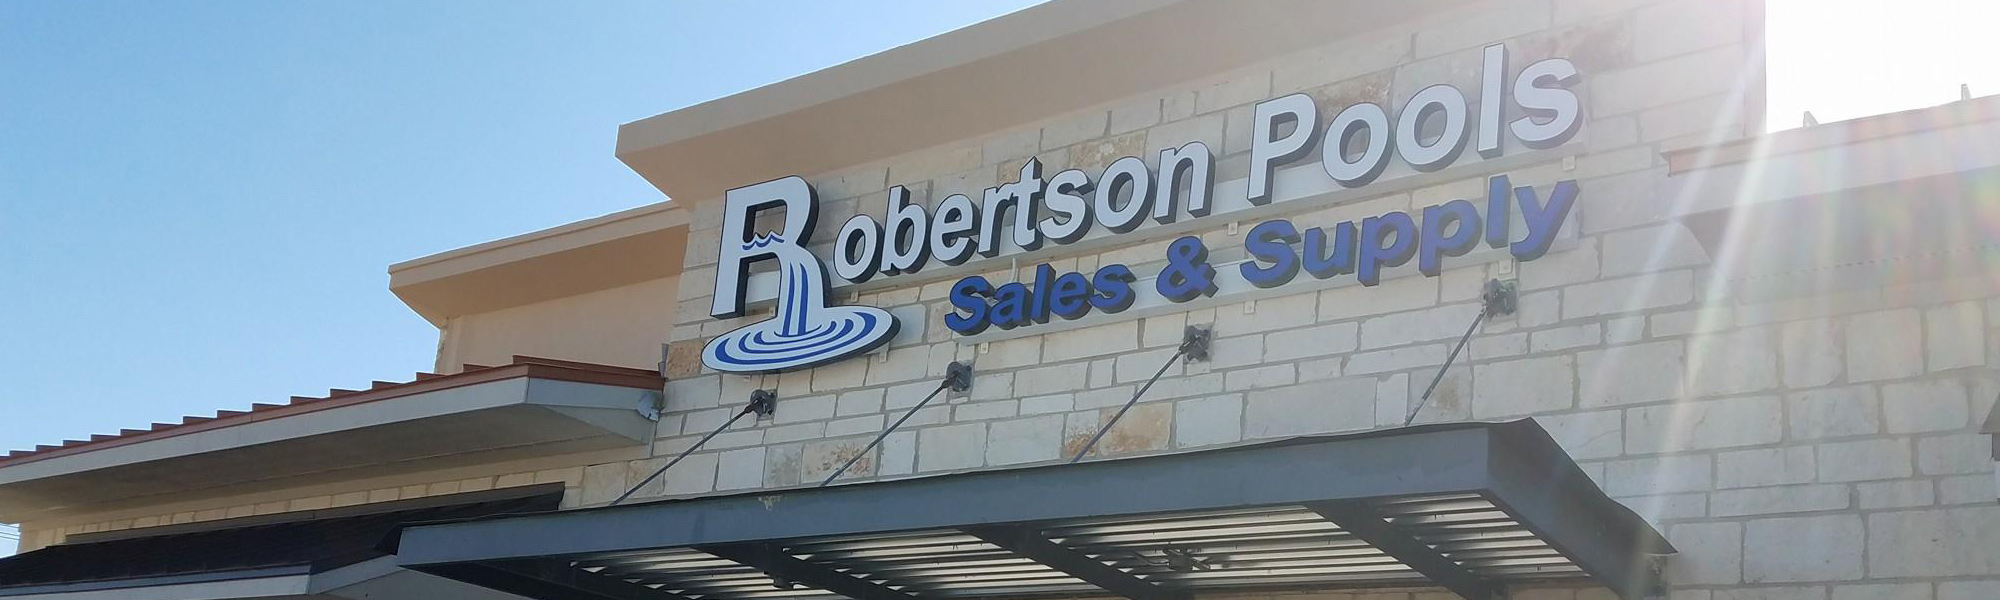 Robertson Pools